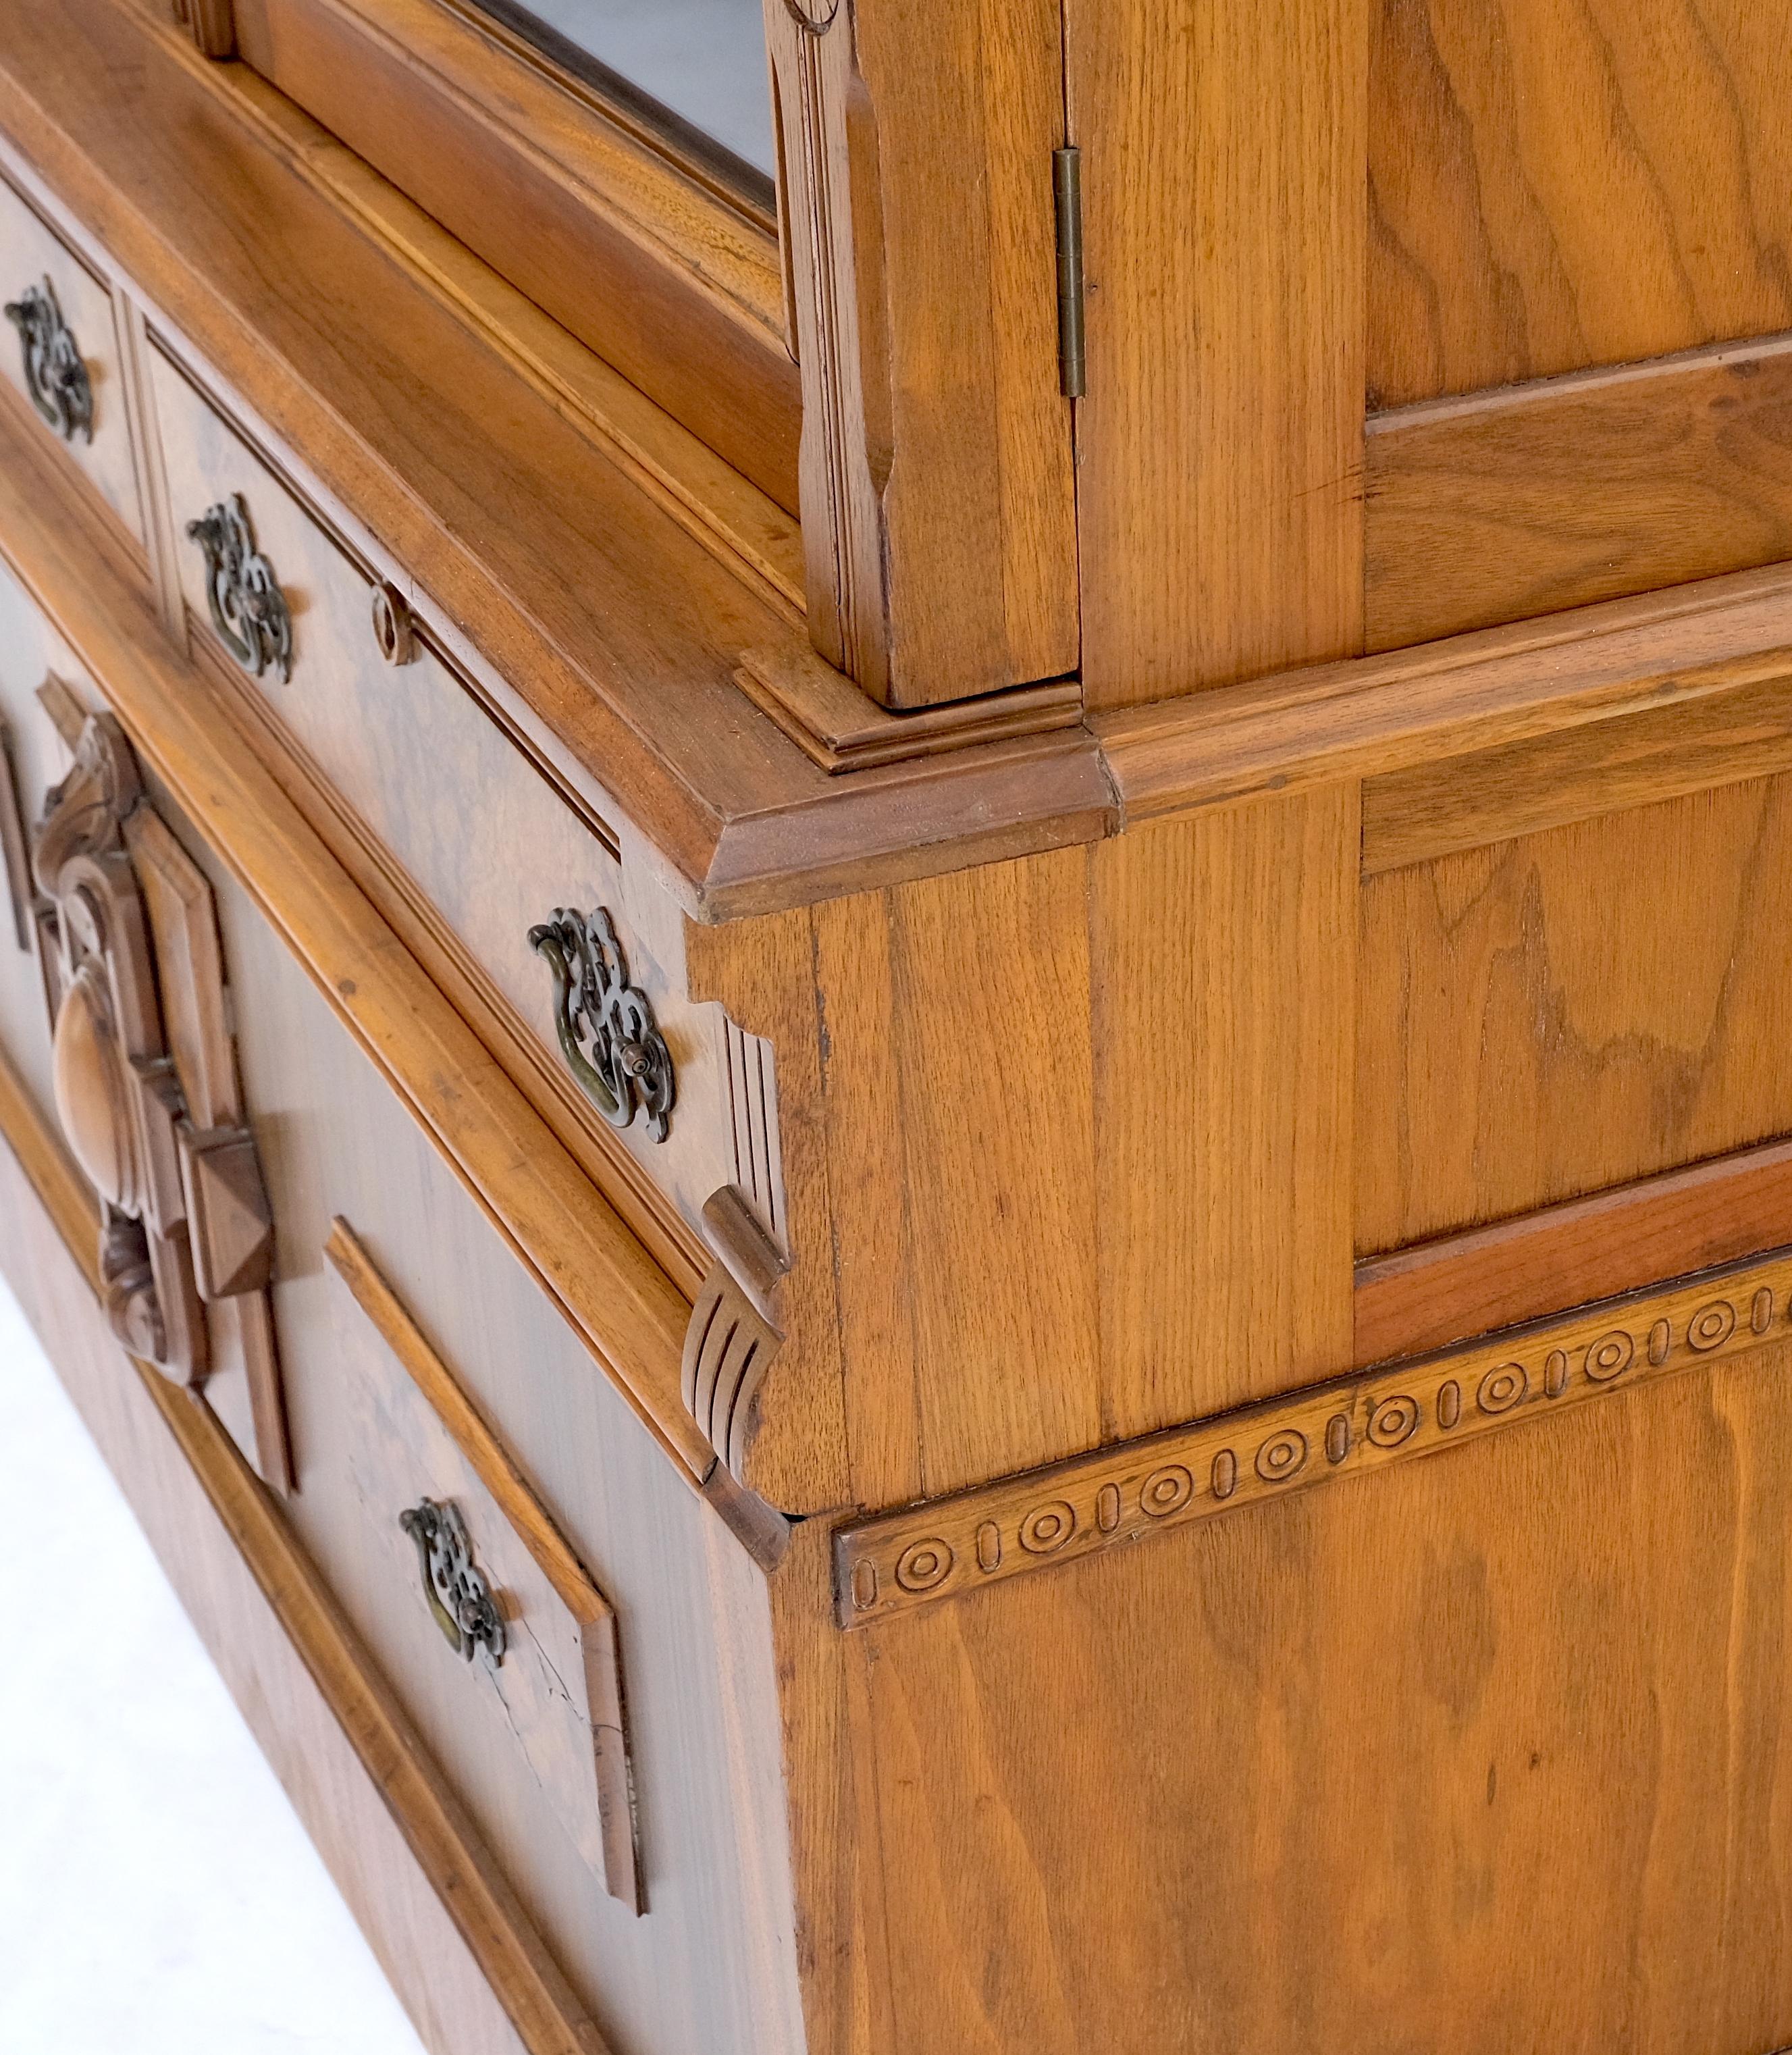 Burl Walnut Adjustable Shelves Two Doors One Drawer Antique Bookcase Cabinet For Sale 1